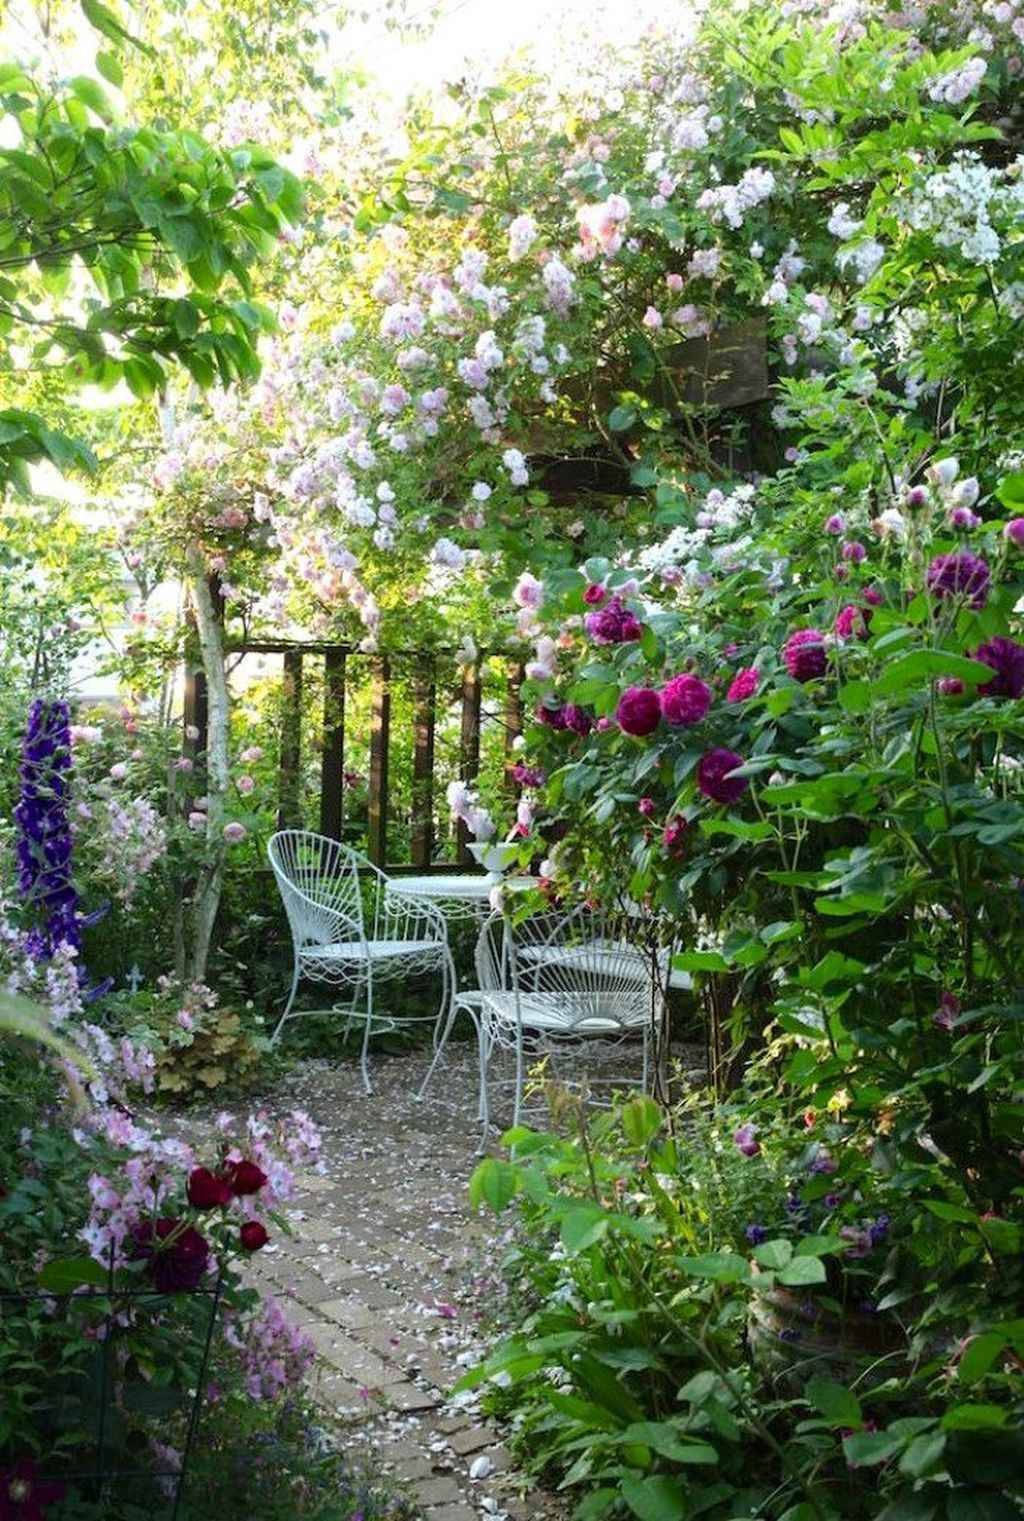 Beautiful Front Yard Cottage Garden Landscaping Ideas Homekover